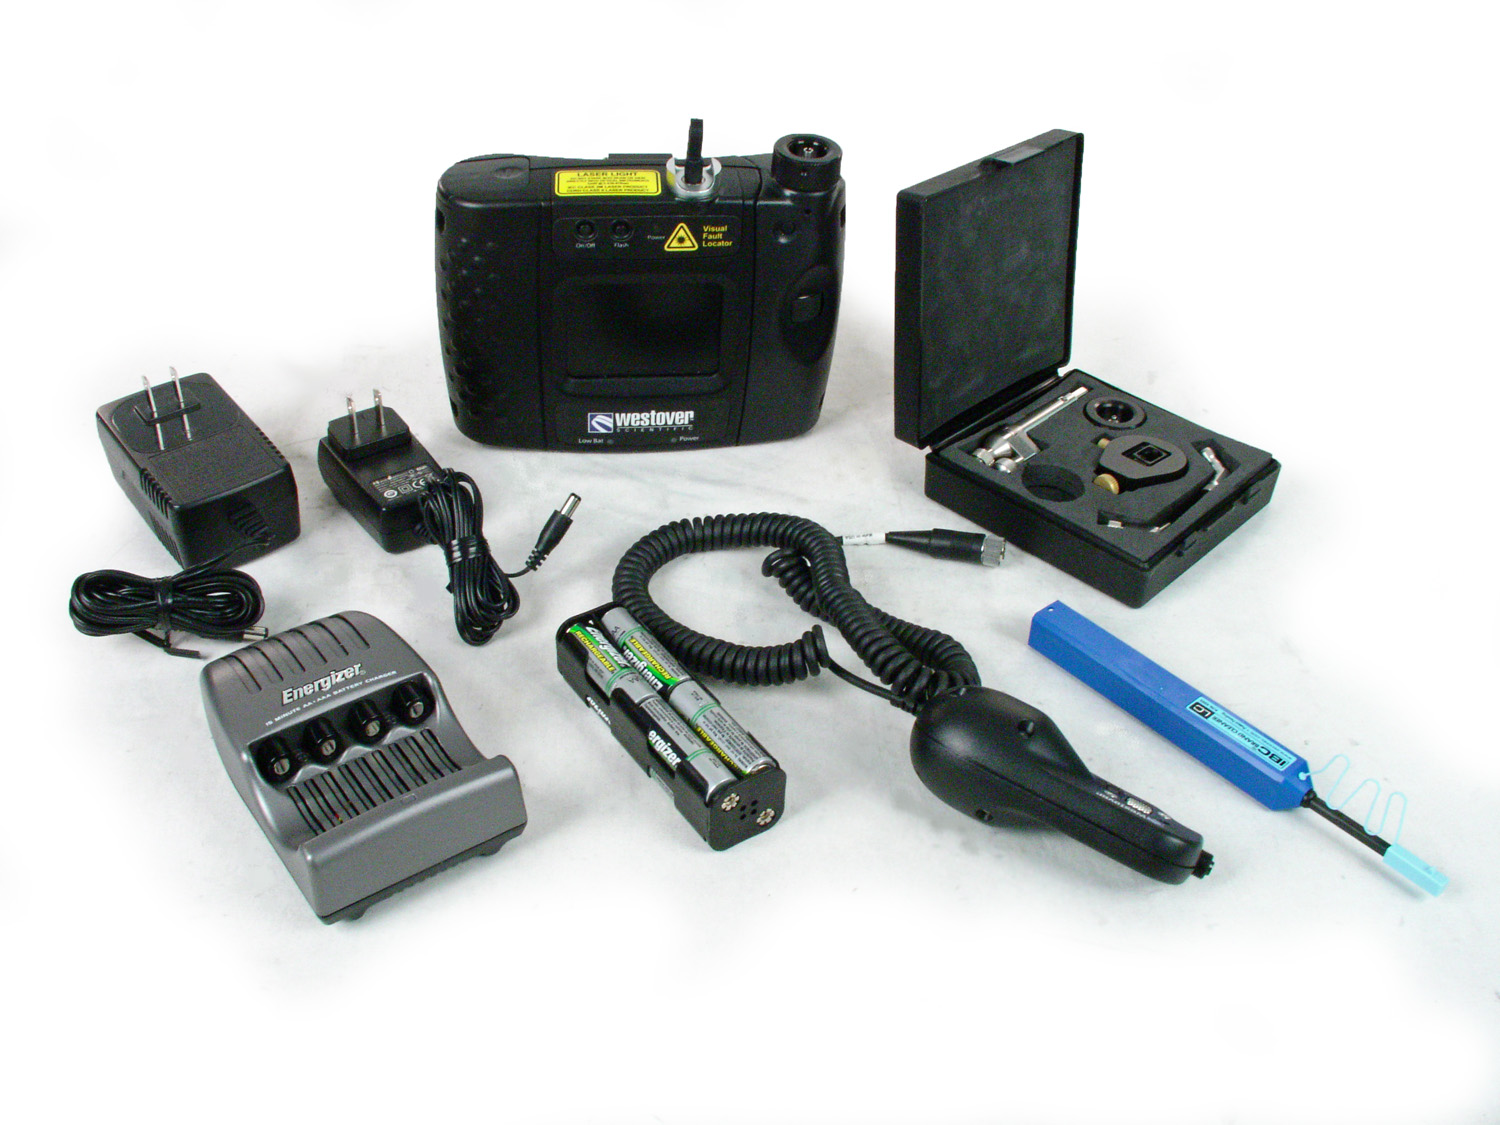 Used JDSU / Acterna Test Equipment For Sale | AccuSource Electronics